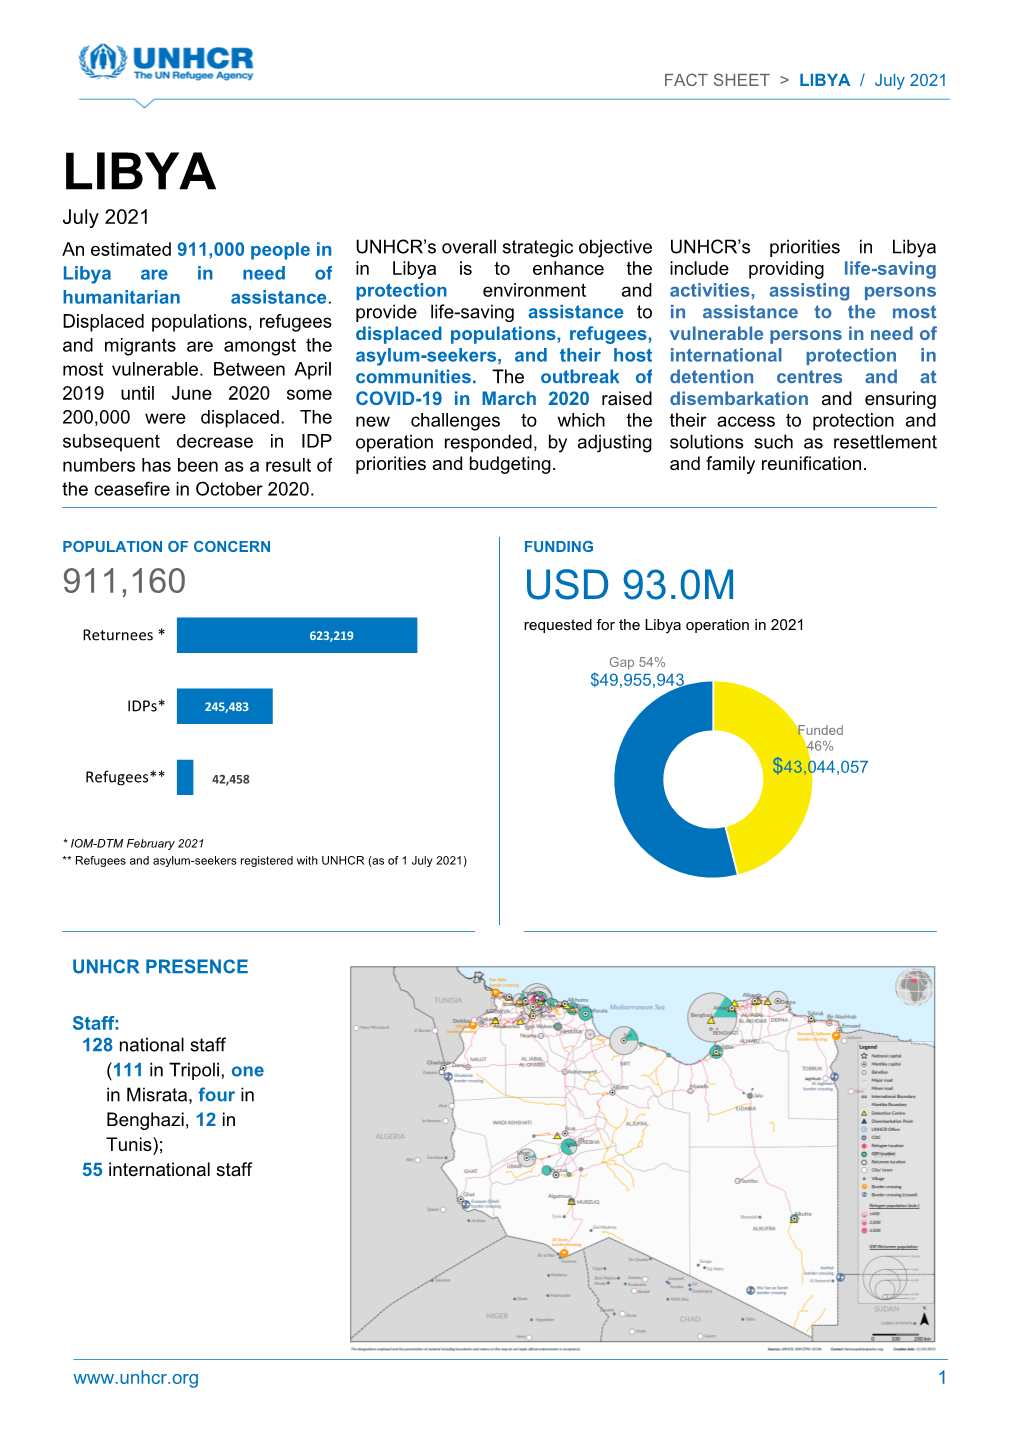 UNHCR Libya Fact Sheet